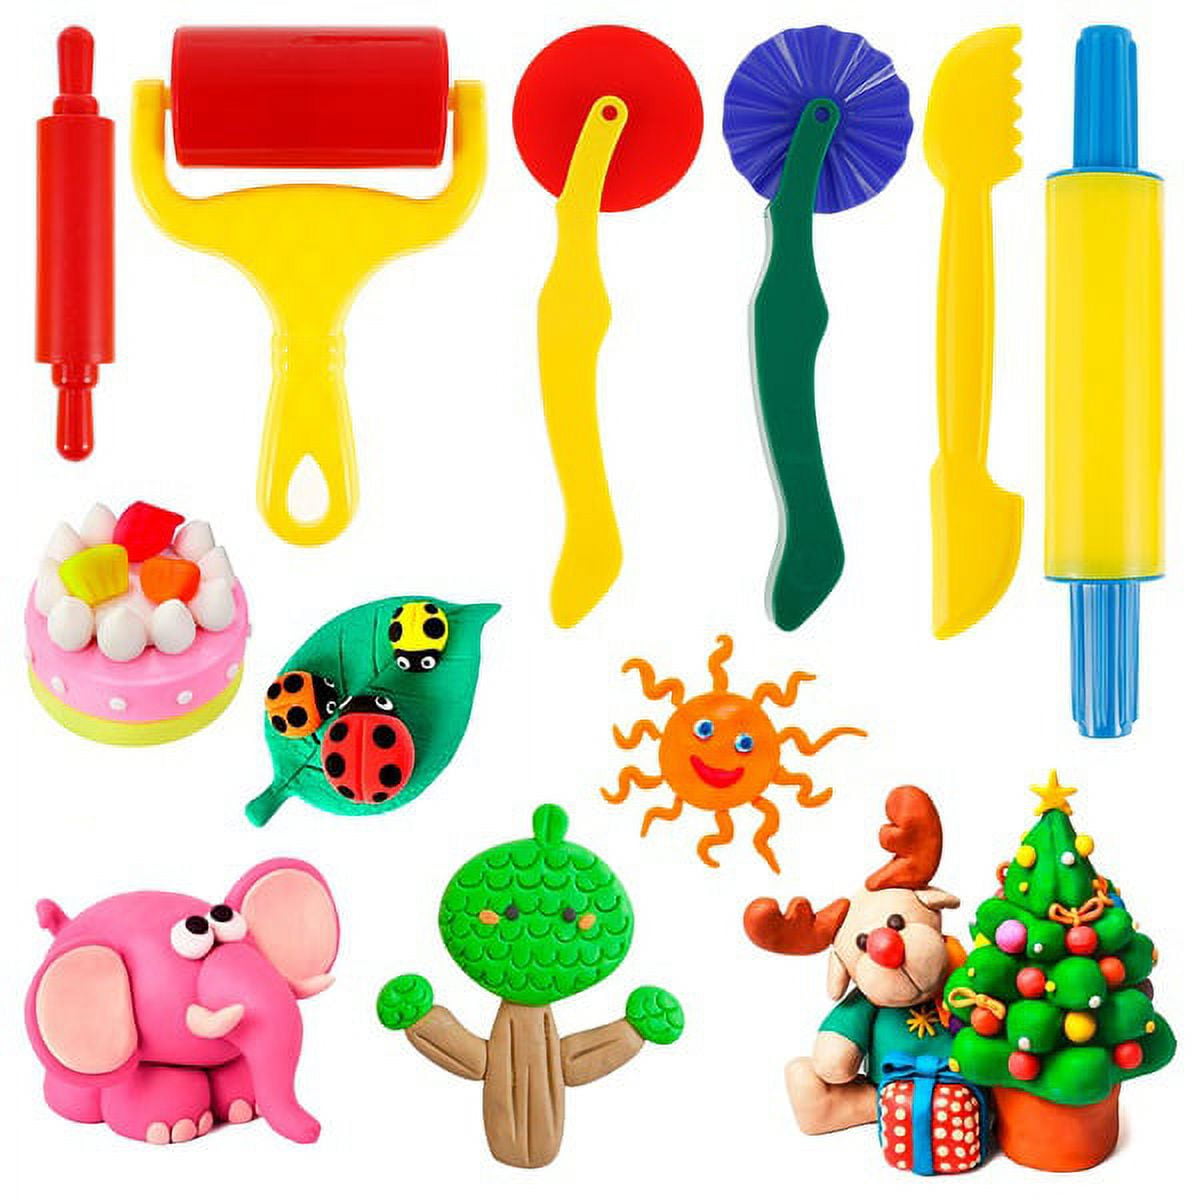 Hotbest 23pcs Play Tools Color Play Dough Model Tool Toys Creative 3D Plasticine Tools Playdough Set Kit Children's Gift Toy, Size: 23pcs/set